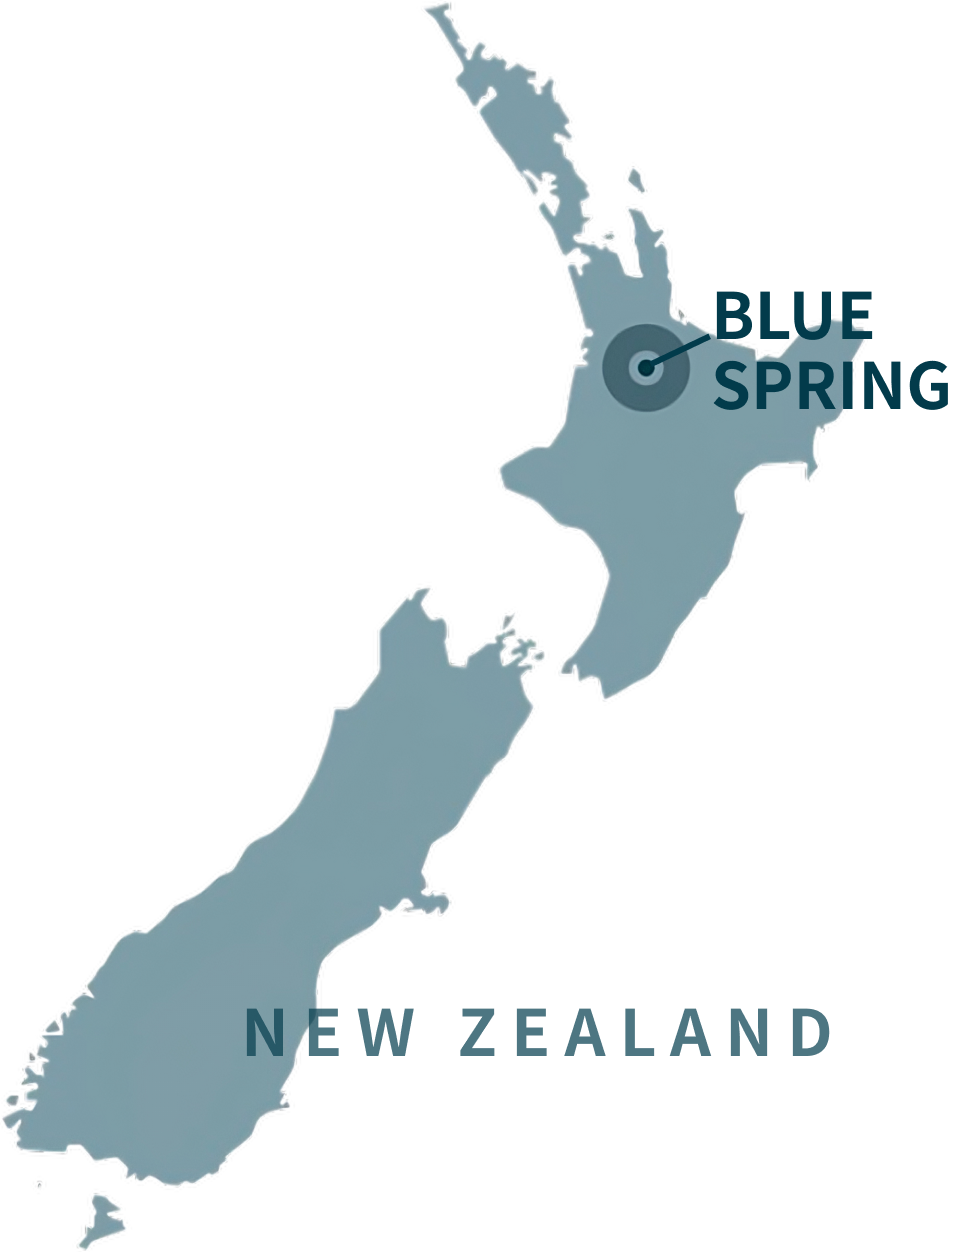 Blue Spring is located in Te Waihou River, Putaruru, North Island, New Zealand